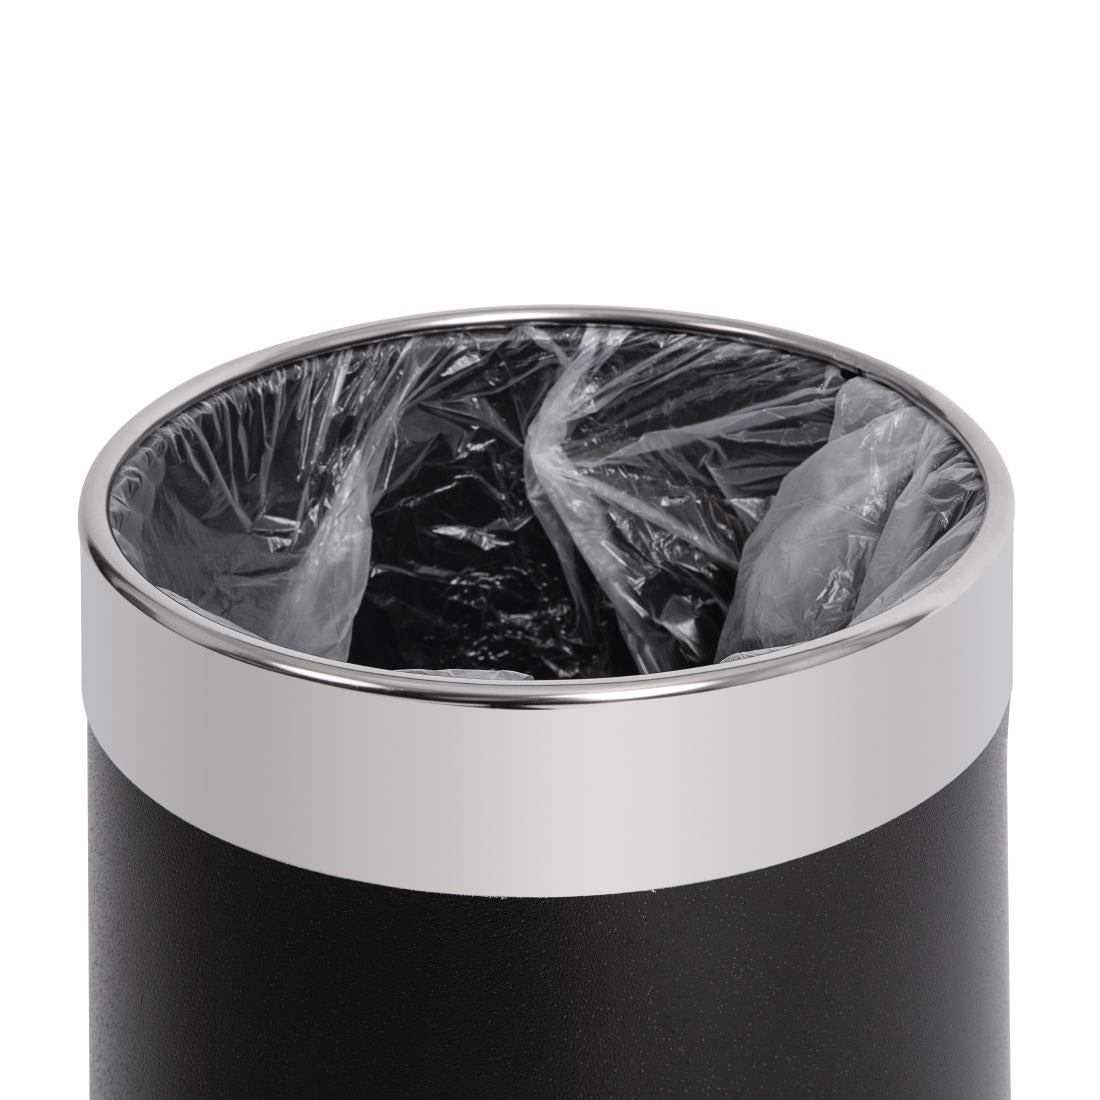 Bolero Black Waste Paper Bin with Silver Rim JD Catering Equipment Solutions Ltd